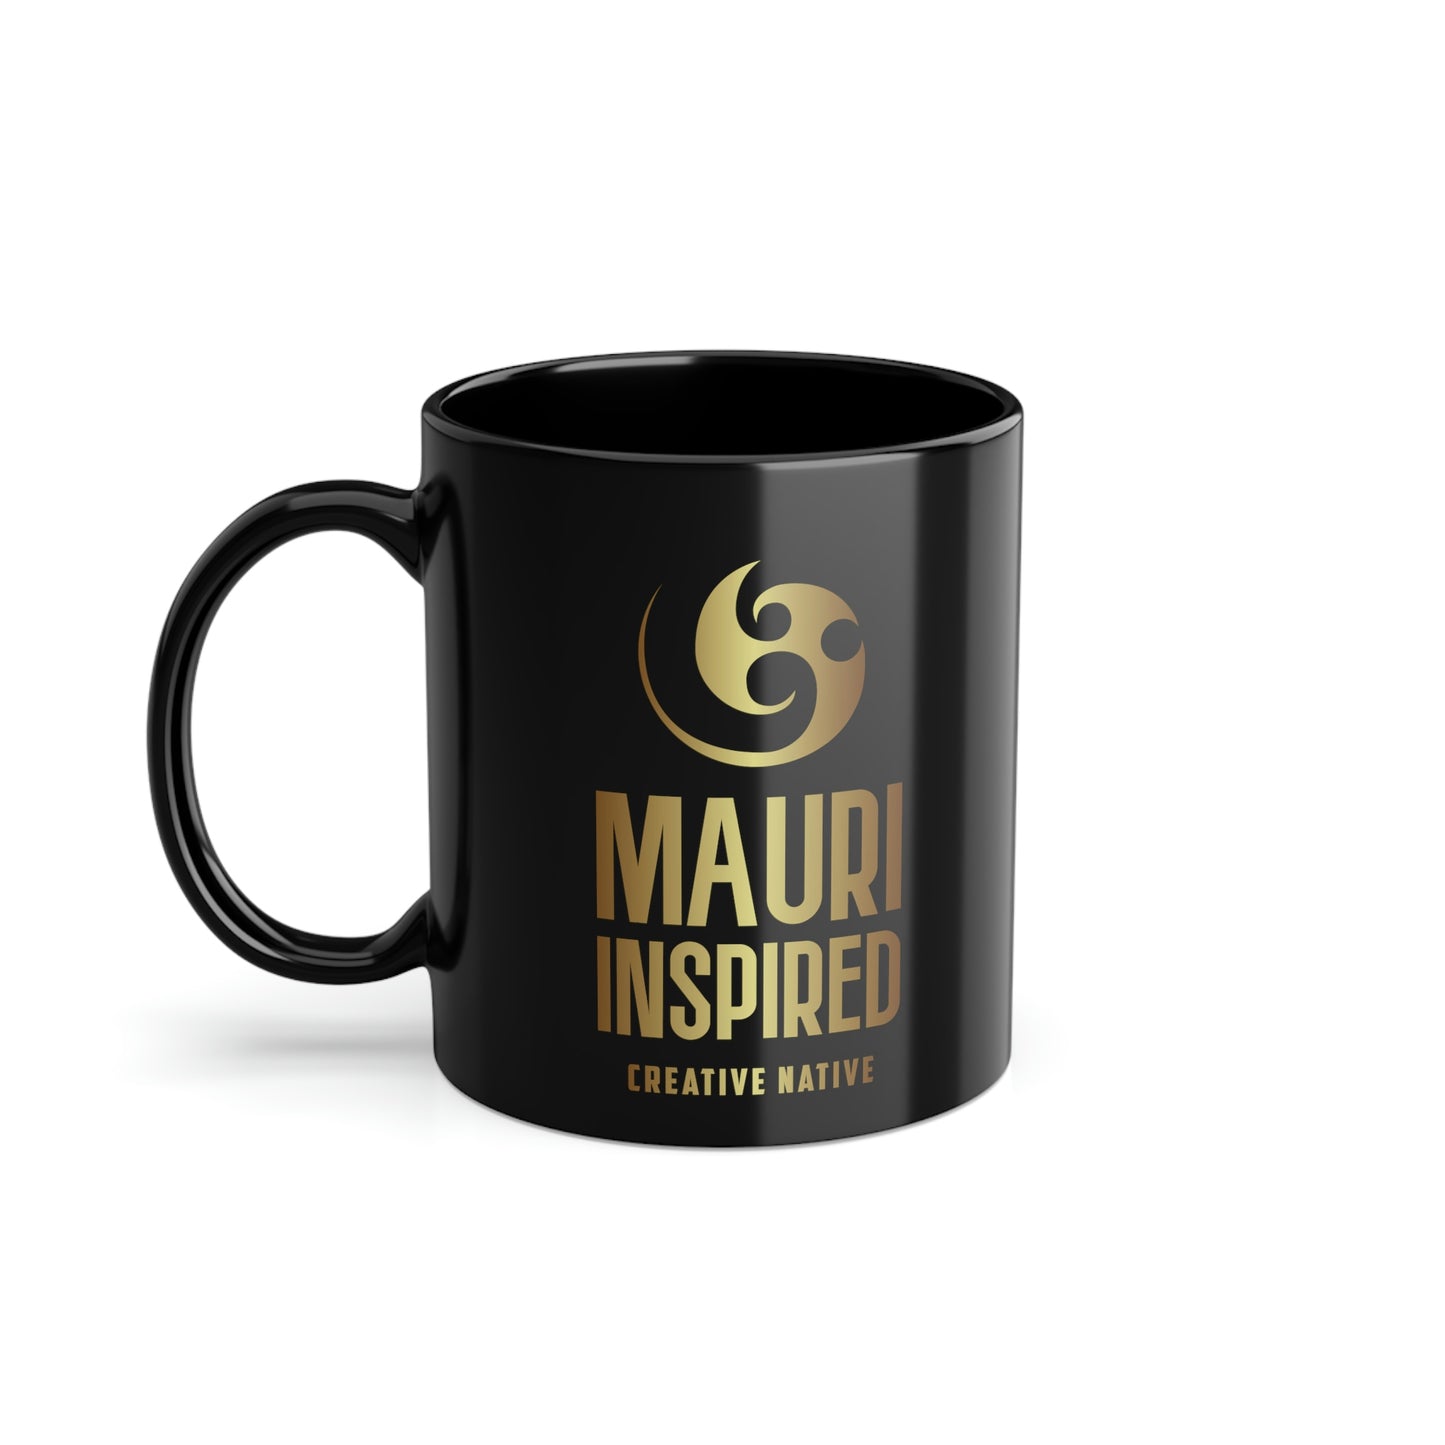 Mauri Inspired - Black Coffee Cup, 11oz